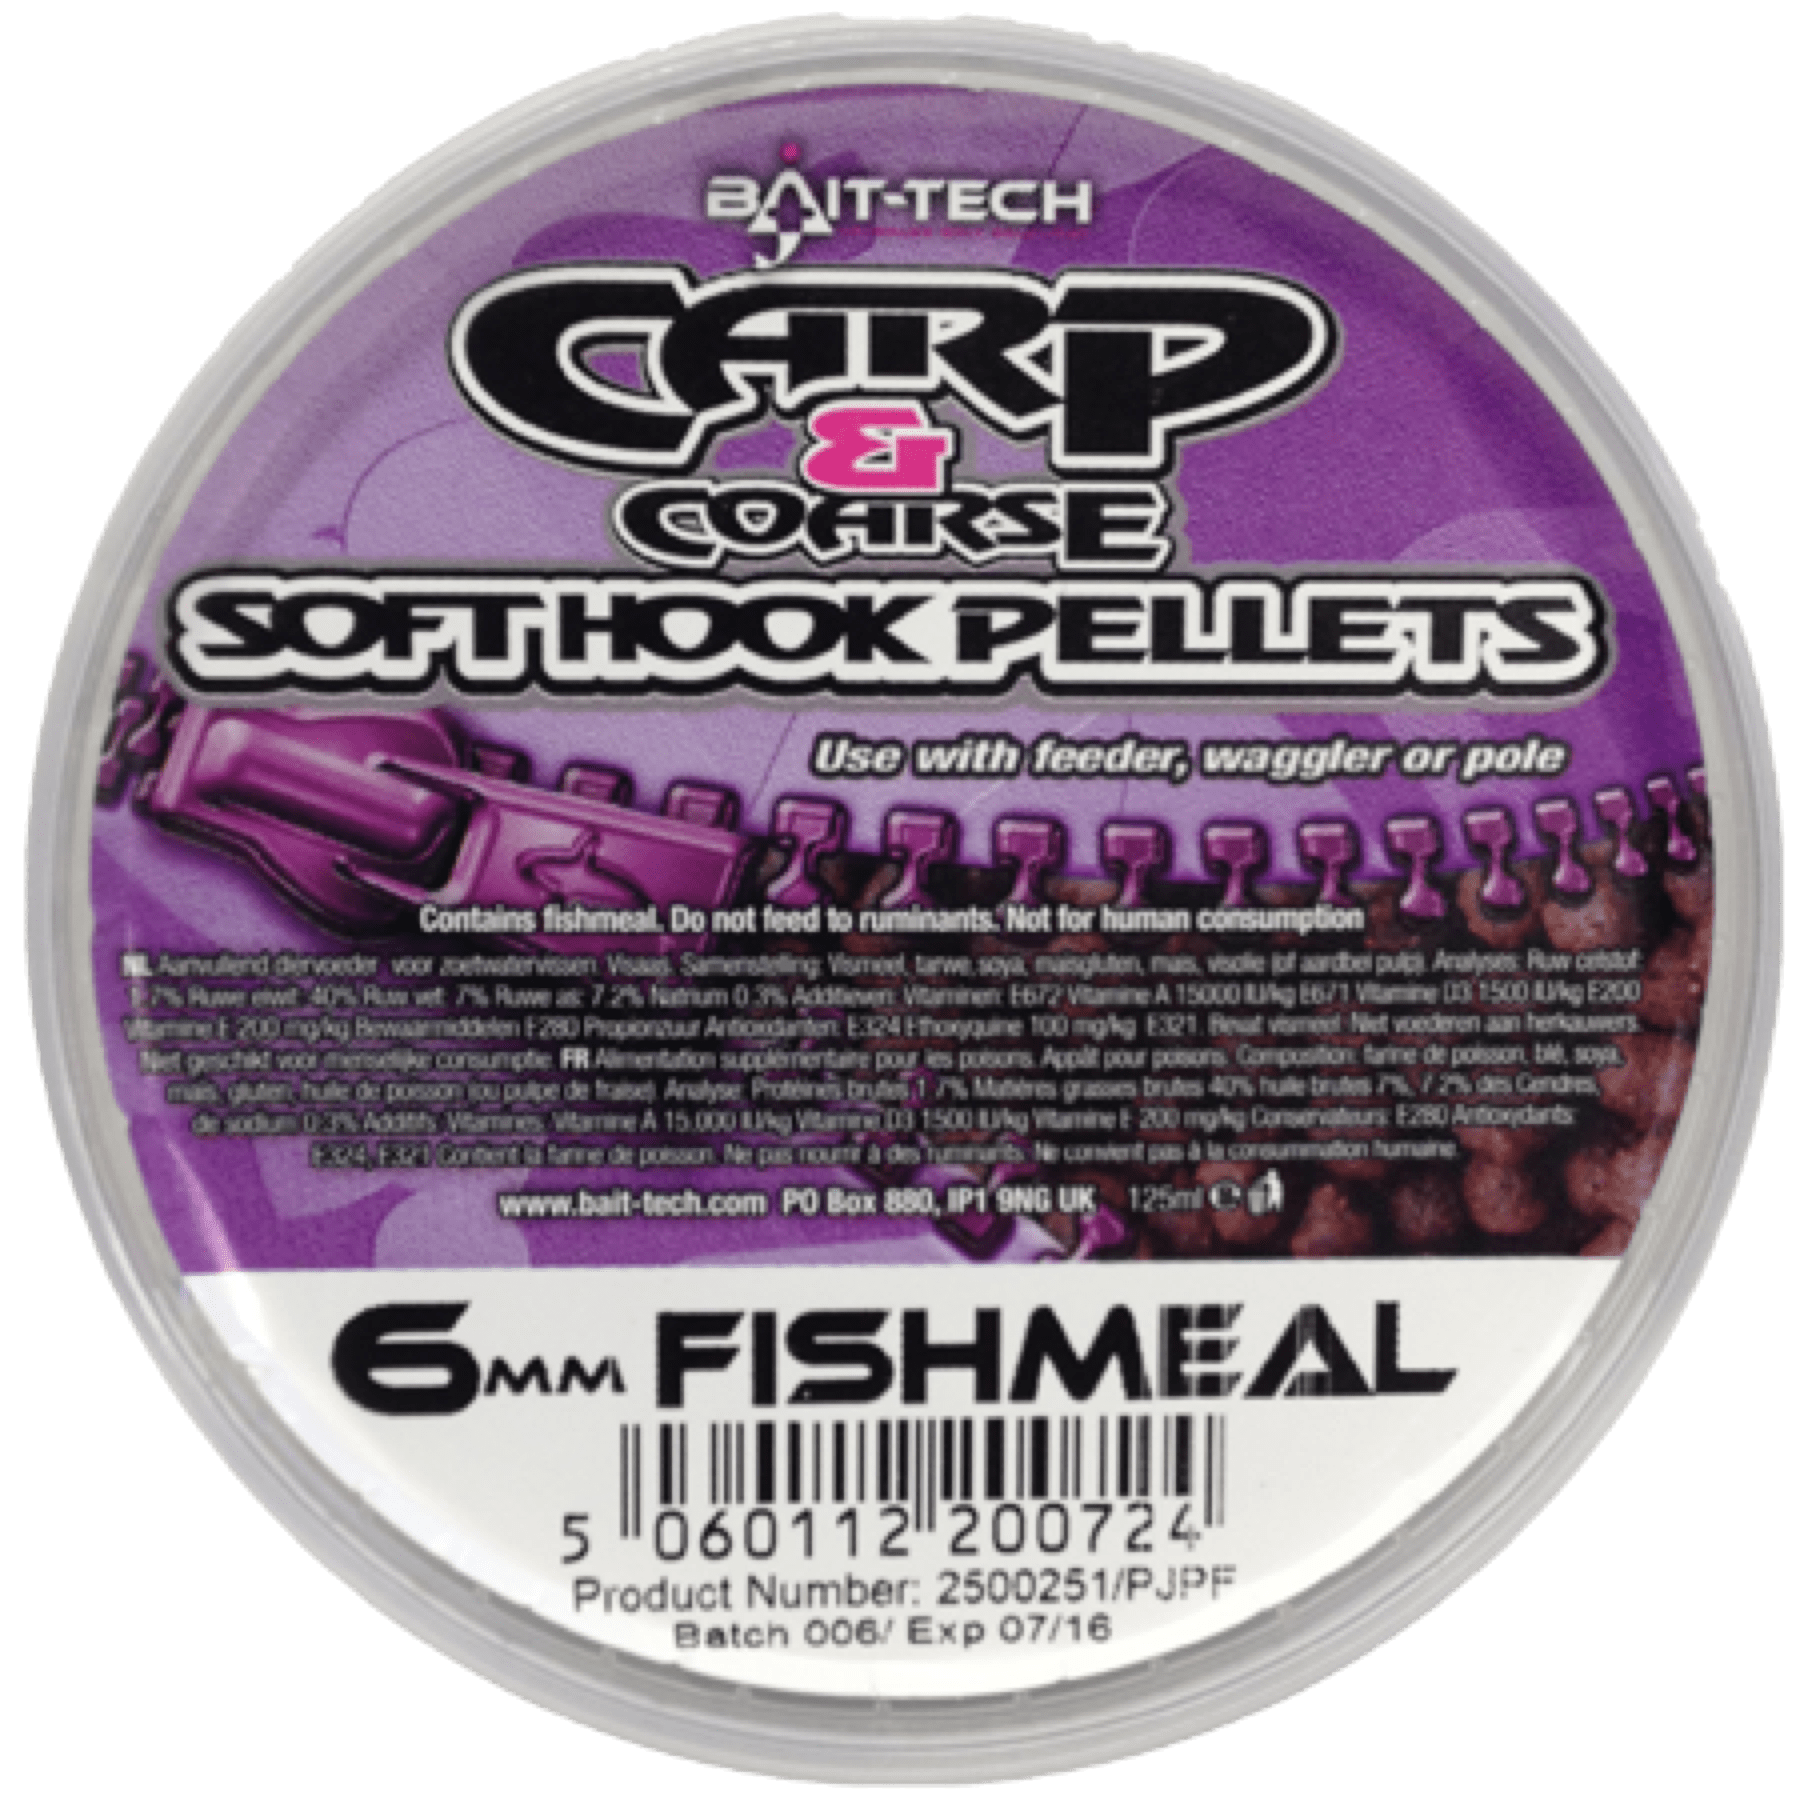 bait-tech carp & coarse soft hook pellets fishmeal